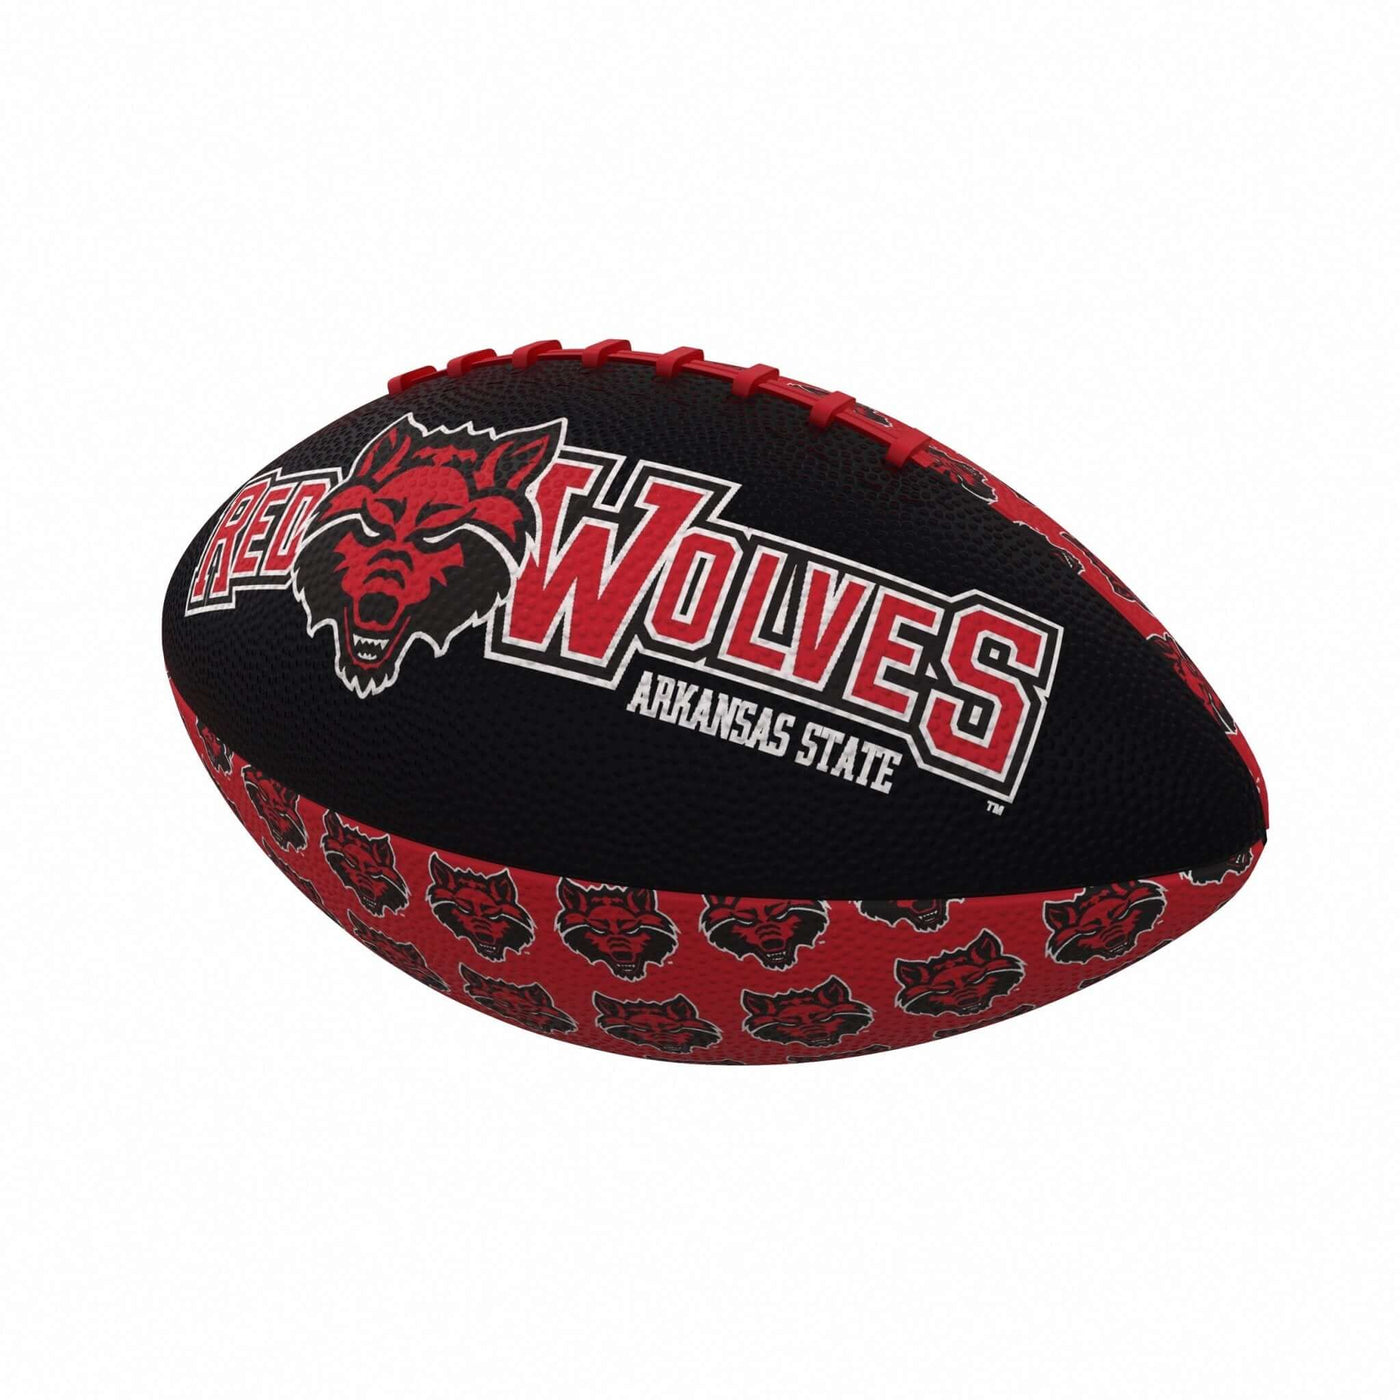 Arkansas State Mini-Size Rubber Football - Logo Brands